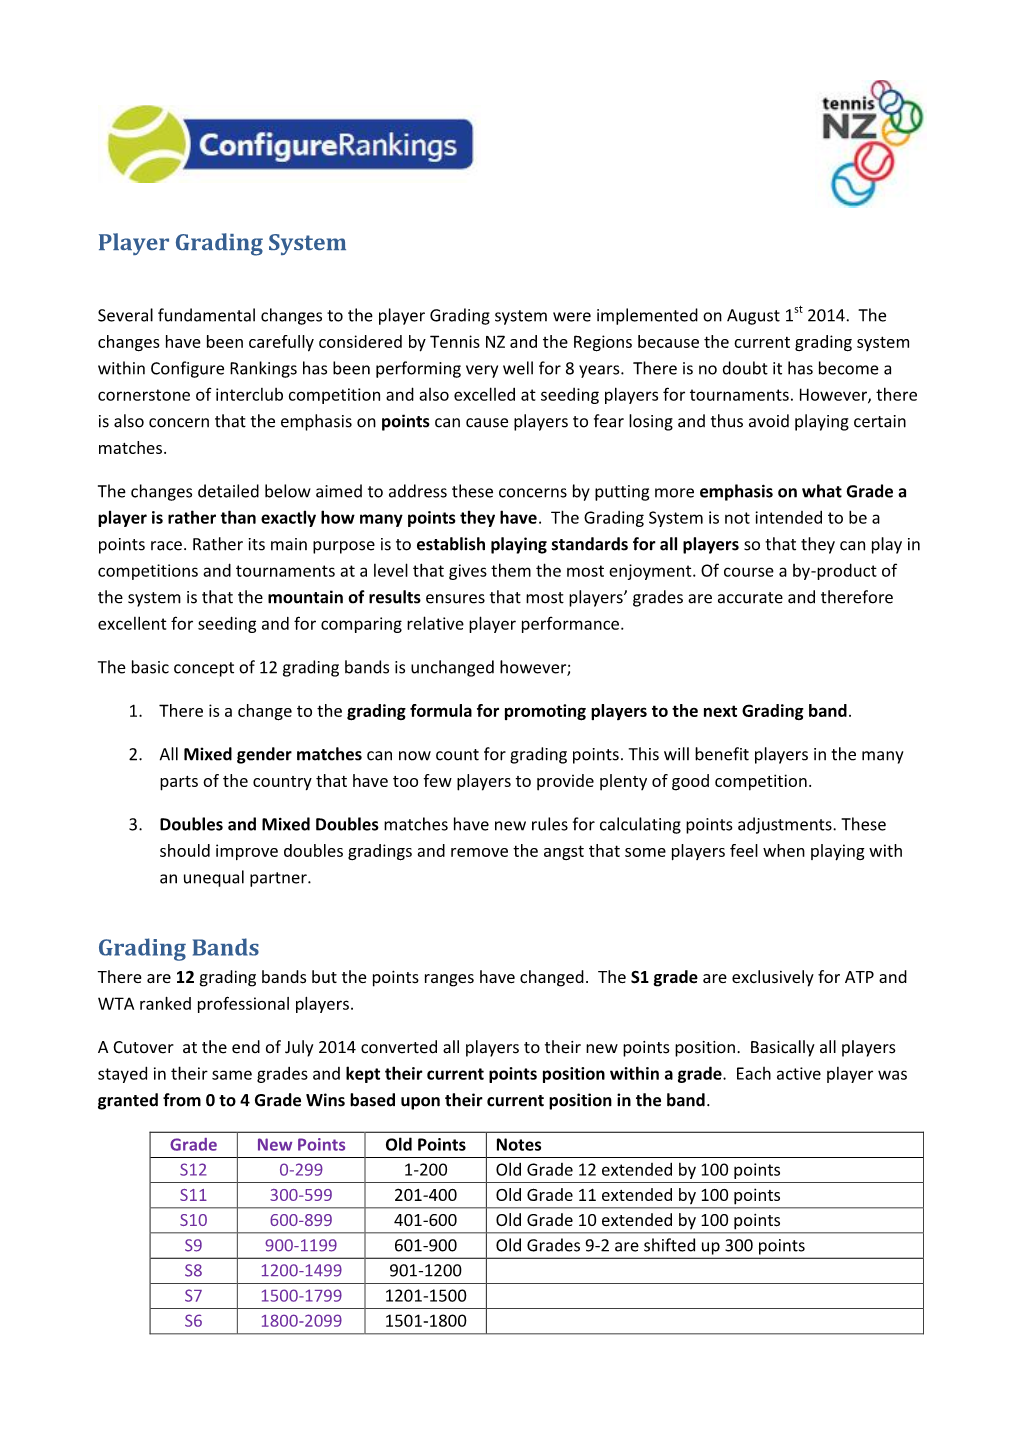 Player Grading System Grading Bands